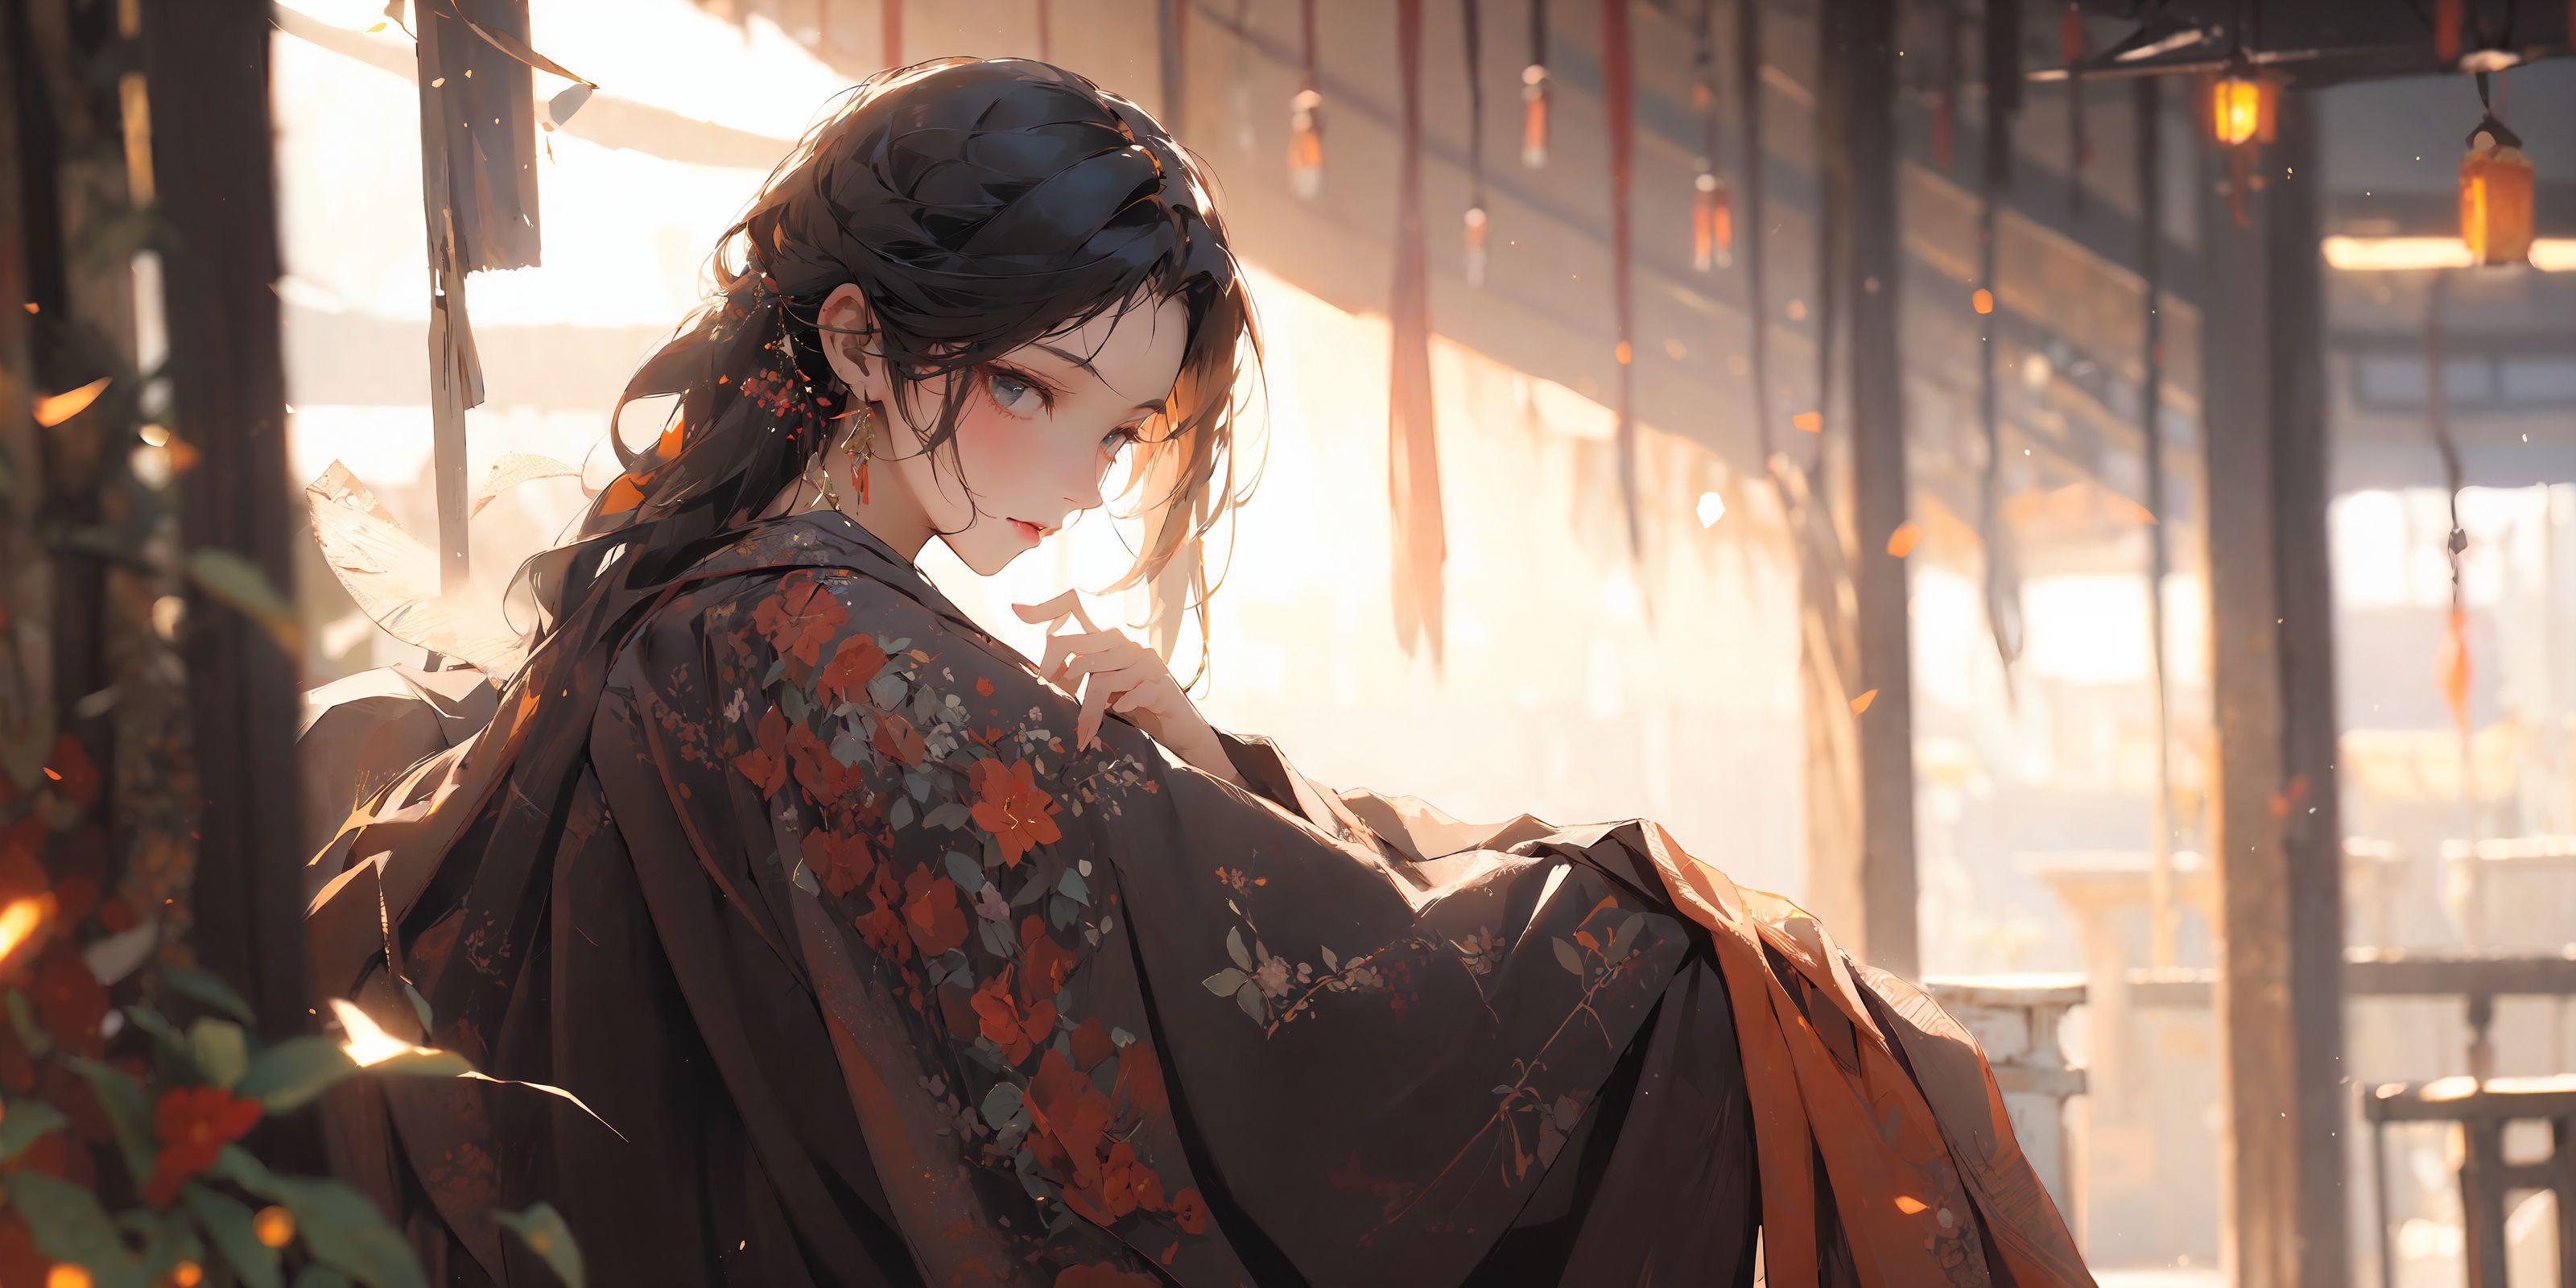 侠女/Chinese swordswoman /国风 LORA image by chosen